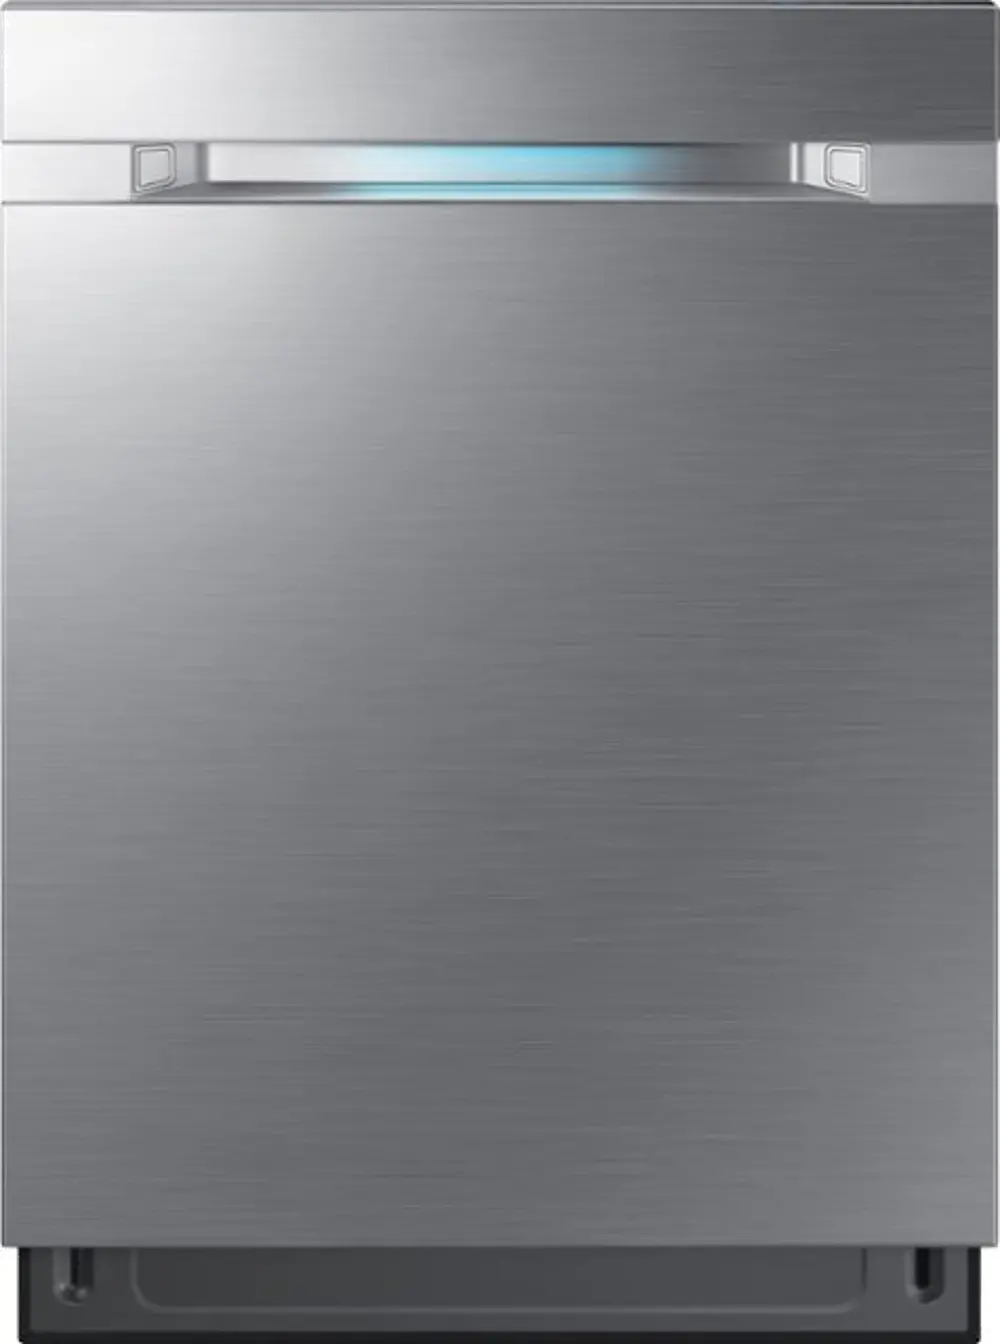 DW80M9990US Samsung Chef Hidden Touch Control Dishwasher - Stainless Steel-1